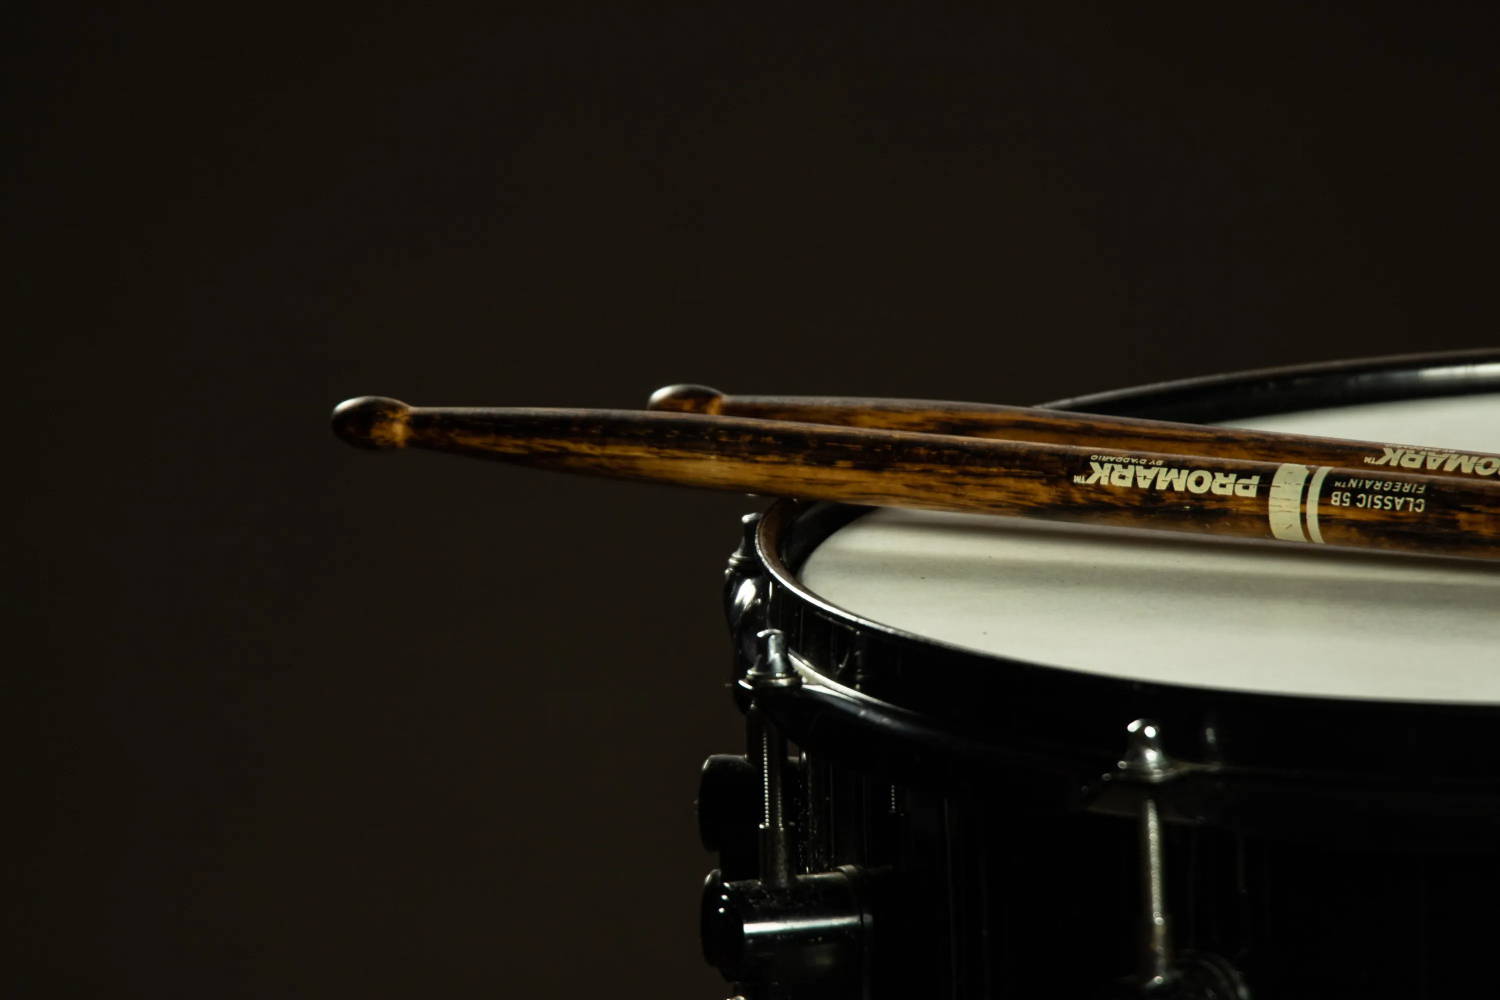 Drumsticks resting on a snare drum